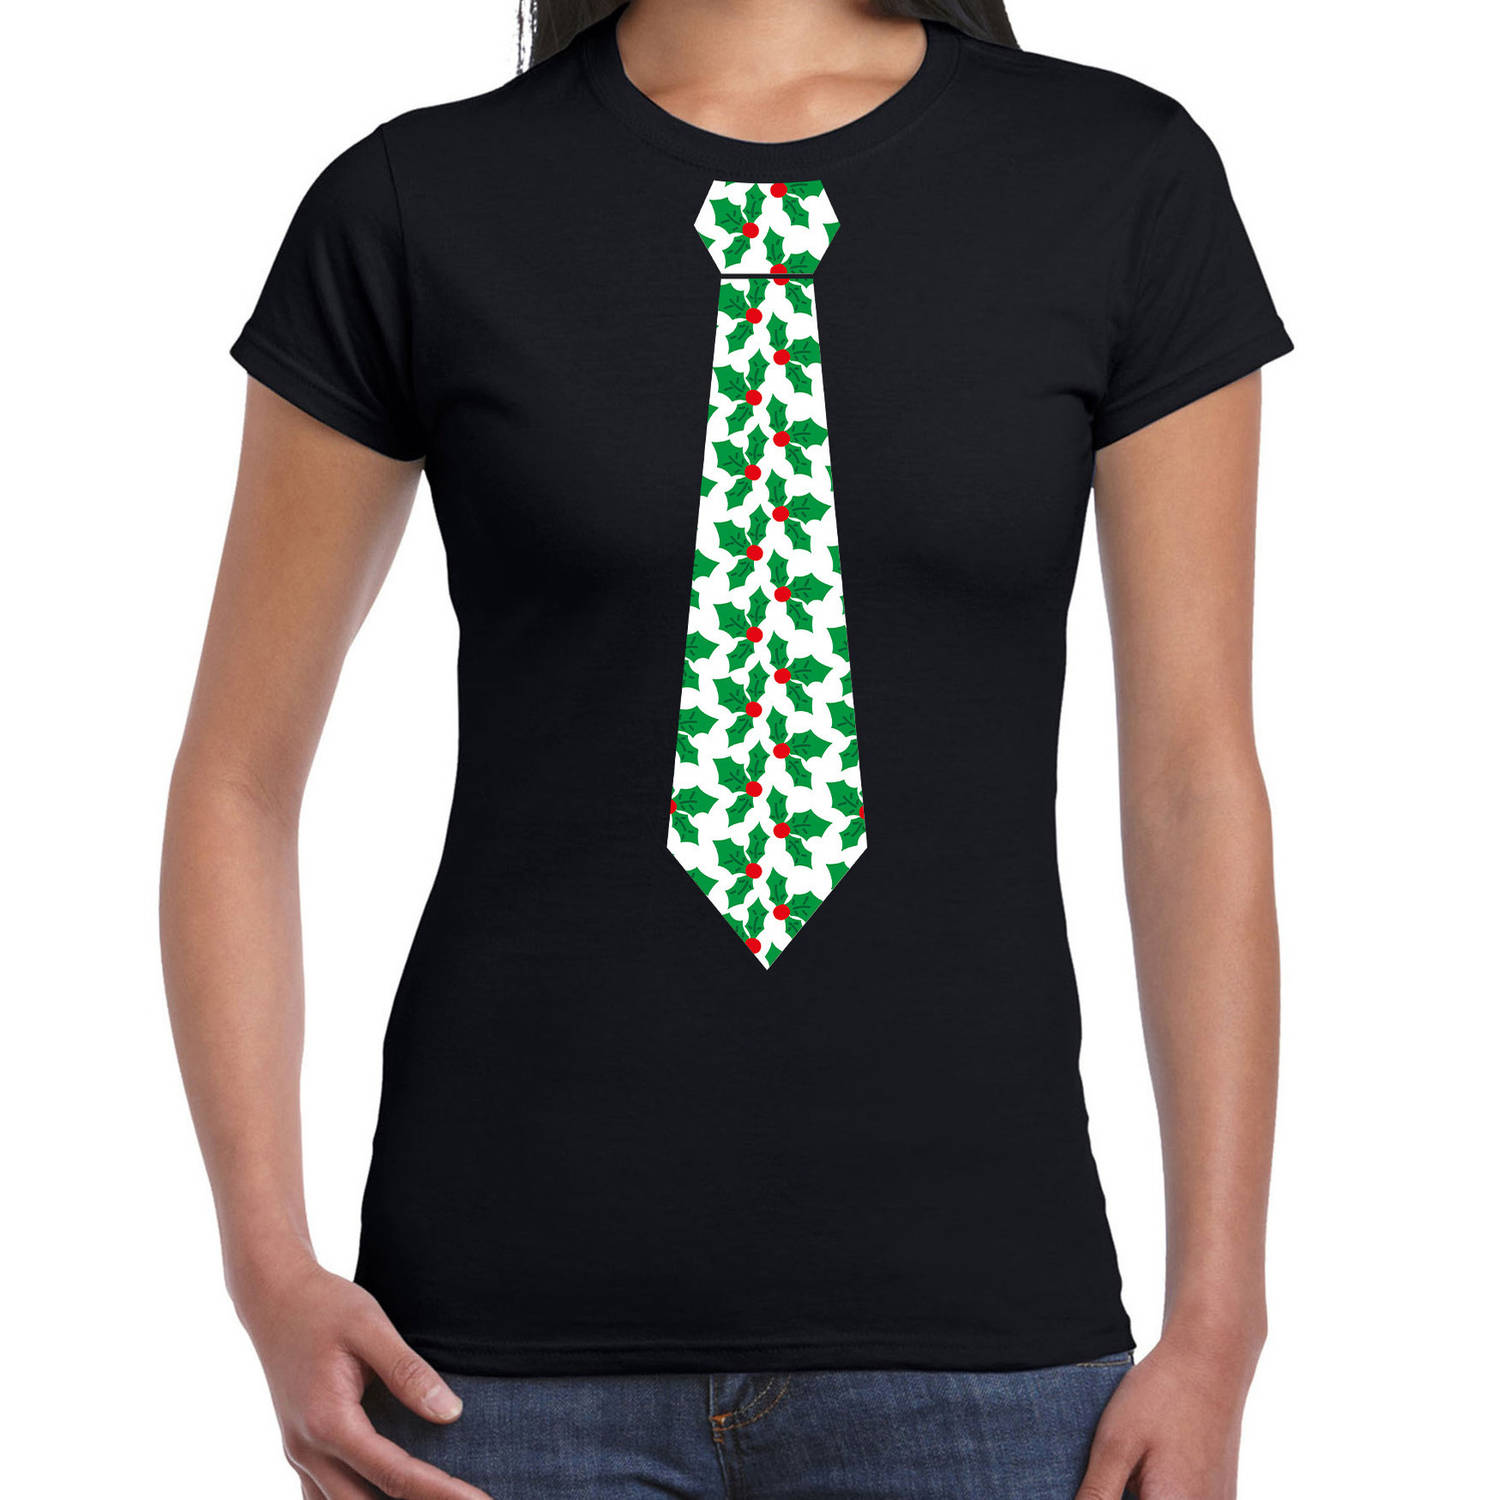 Stropdas Kerst T-shirt mistletoe patroon voor dames zwart S - kerst t-shirts